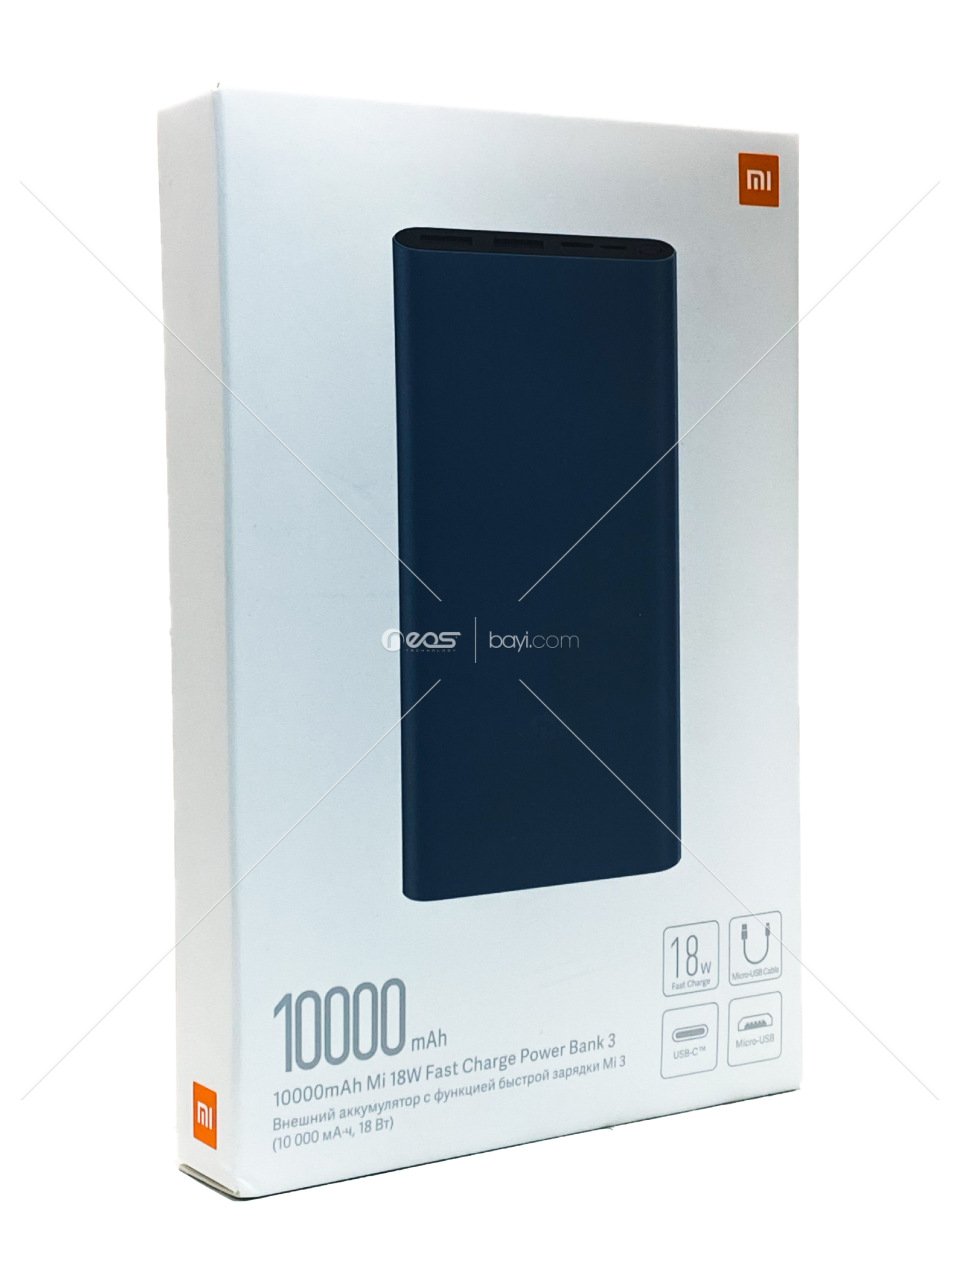 Xiaomi 18W Fast Charge Powerbank 3 10000 Mah